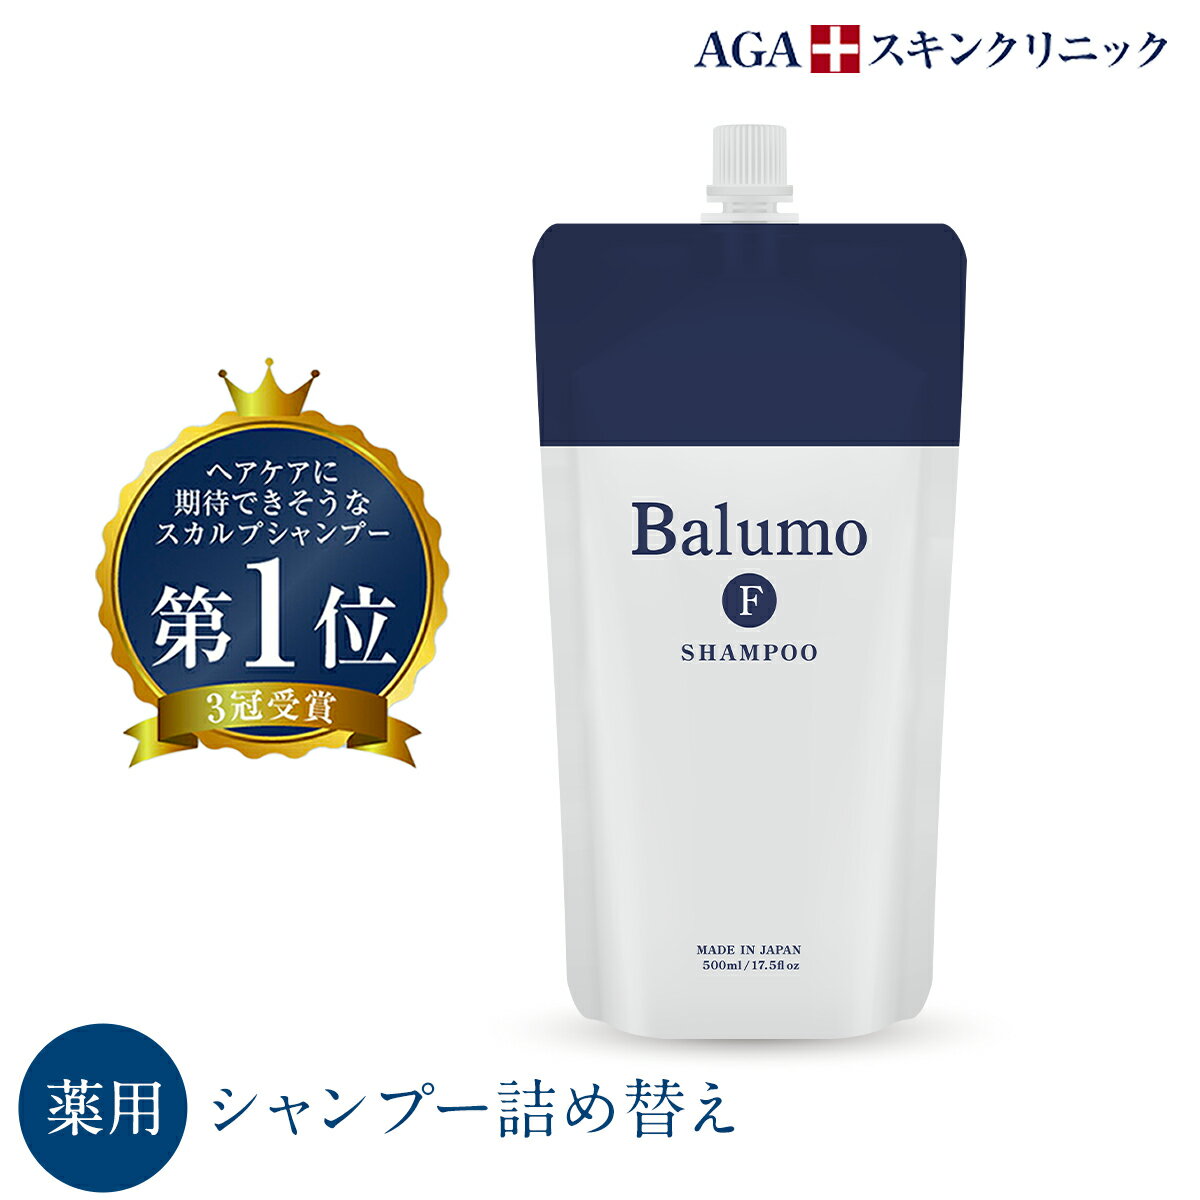 Balumo（ バルモ ）F シャンプー 詰め替え用 大容量（ 500mL ） 医薬部外品 薬用 スカルプシャンプー ノンシリコン アミノ酸シャンプー 頭皮ケア スカルプ AGAスキンクリニック